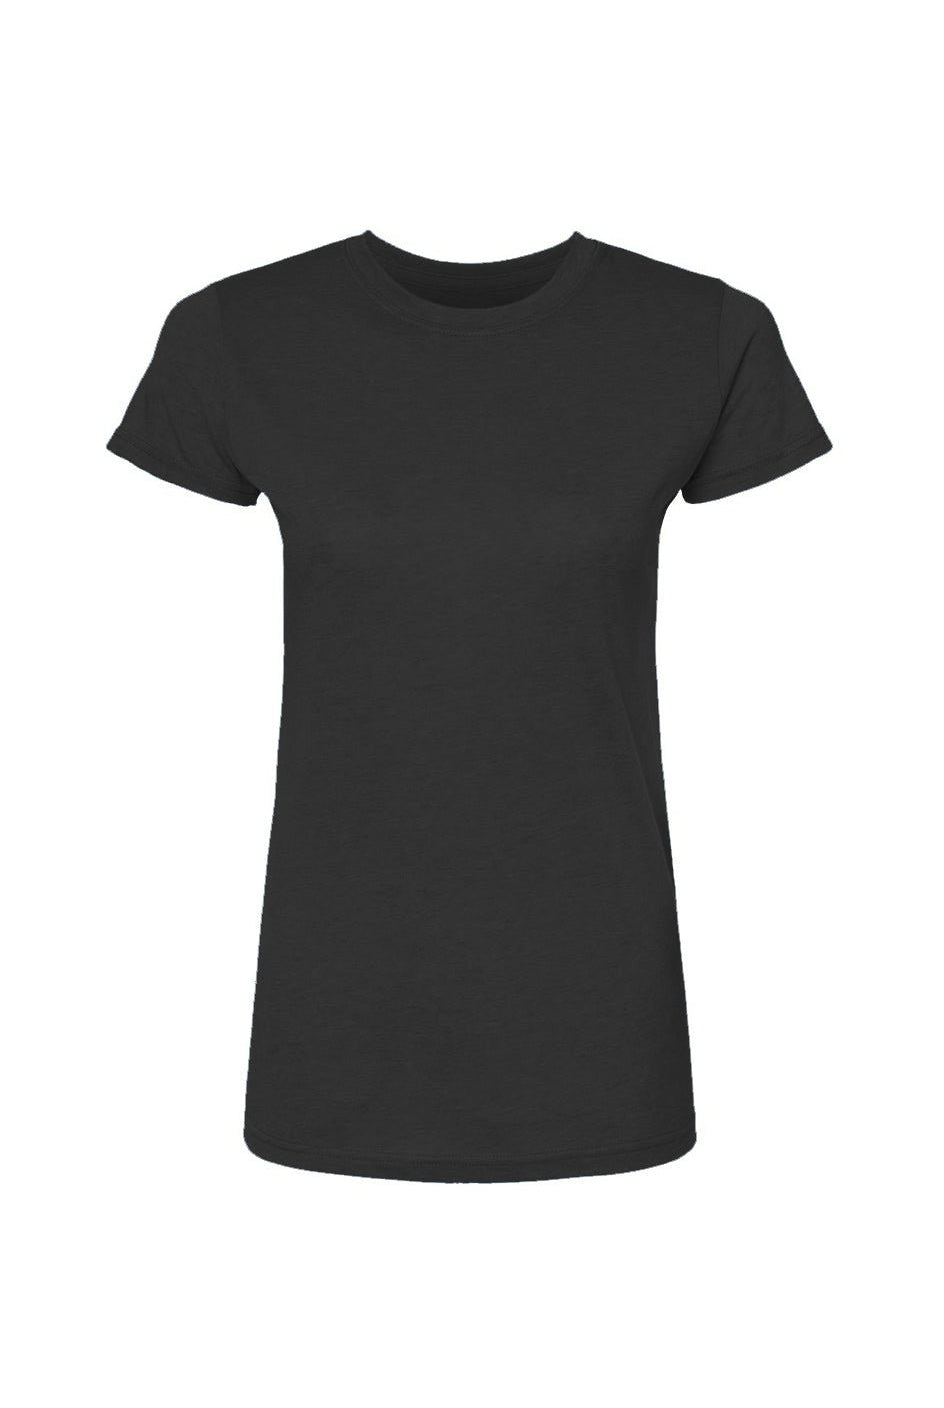 Women's Black Poly-Rich T-Shirt - Women's T-shirt - Apliiq - Women's Black Poly-Rich T-Shirt - APQ-4650295S5A0 - xs - Black - Black - Black Poly-Rich T-Shirt - Black T-shirt